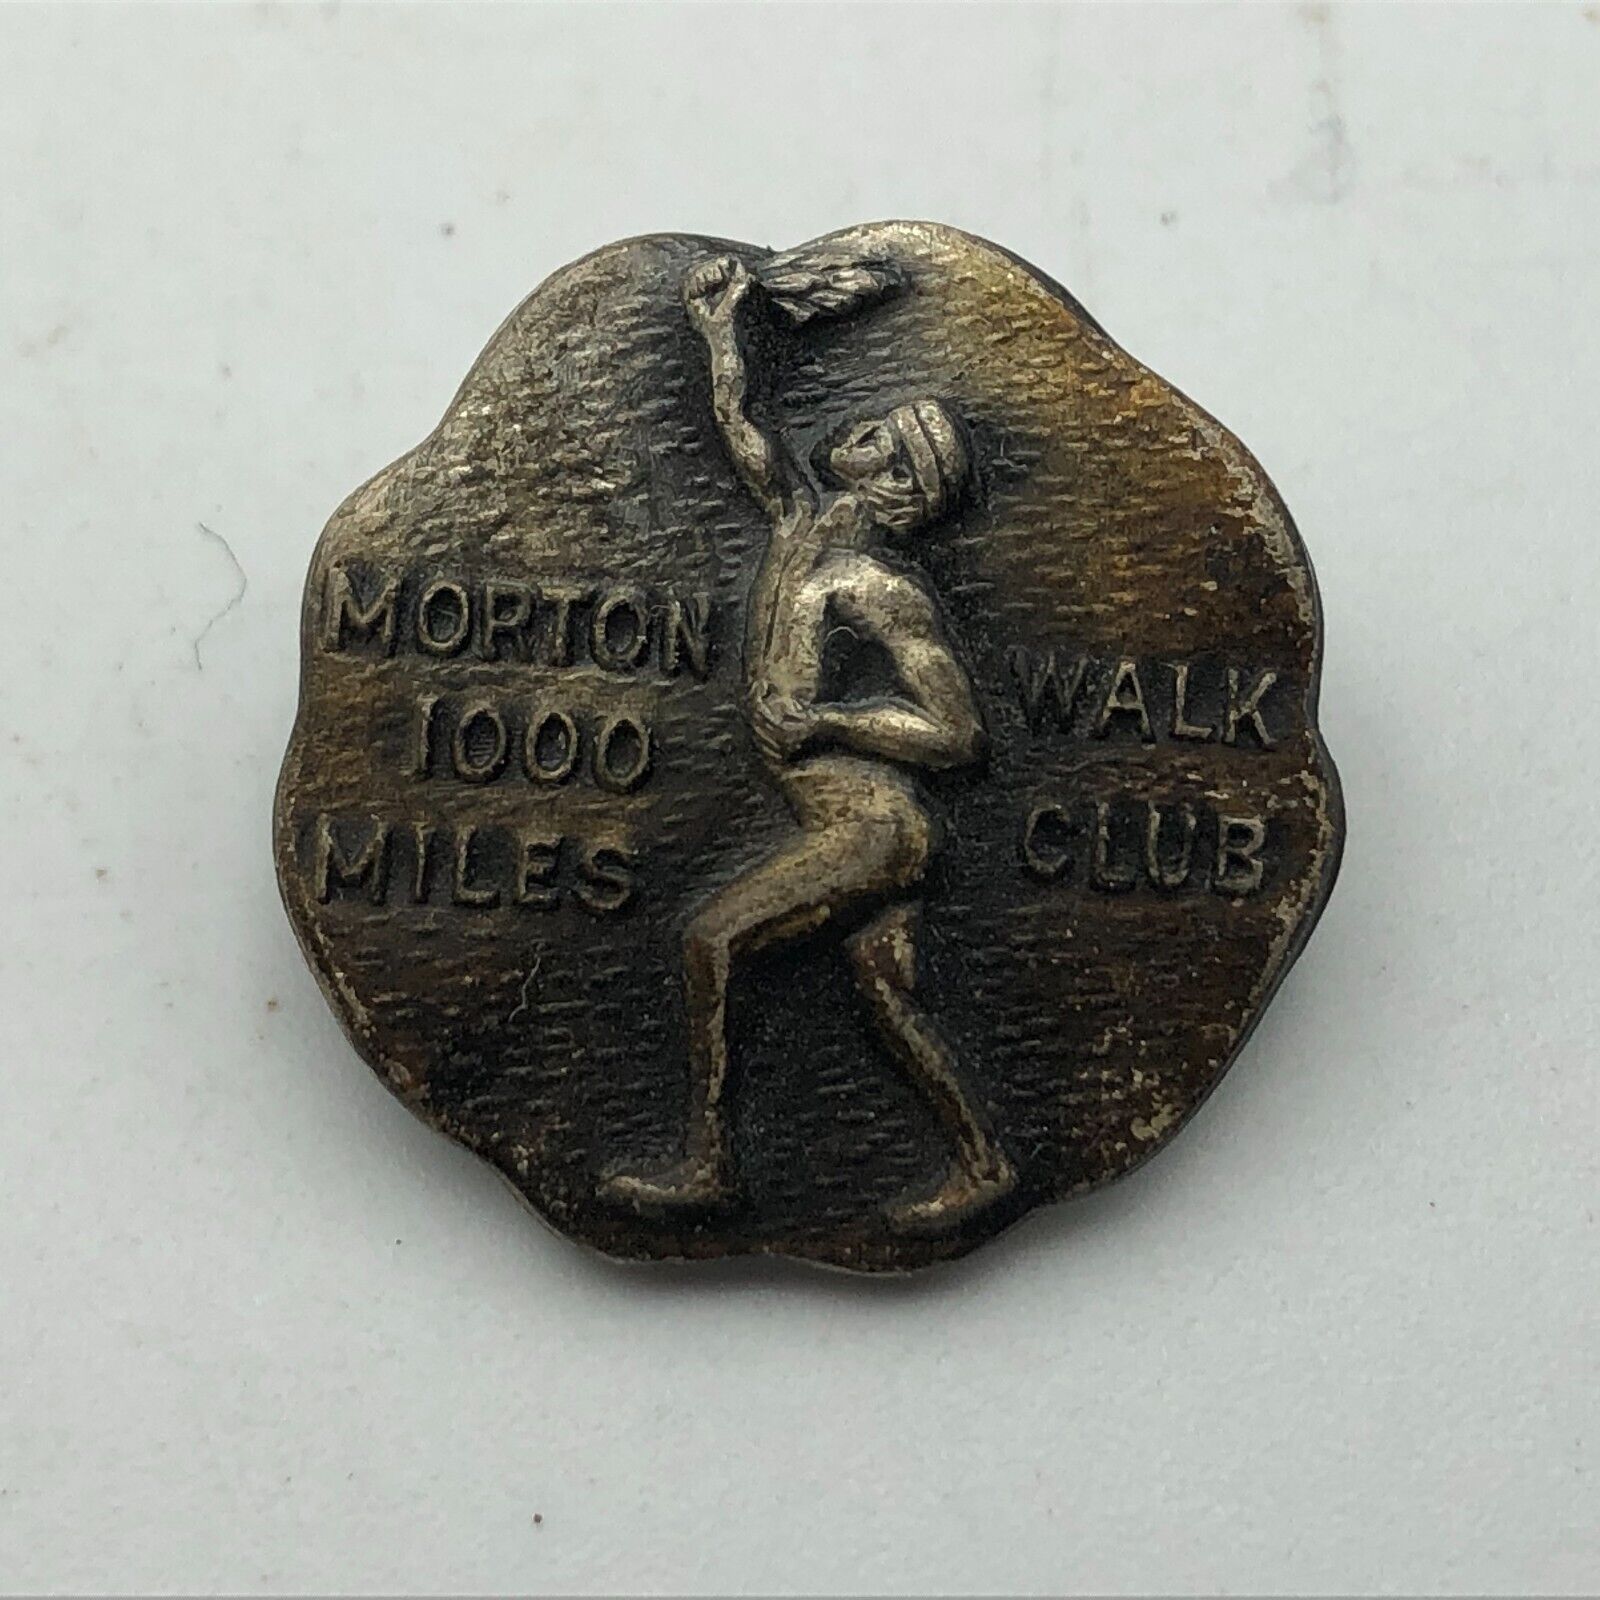 Deco Vtg Antique Morton 1000 Mile Walk Club Award Lapel Pin American Badge R9